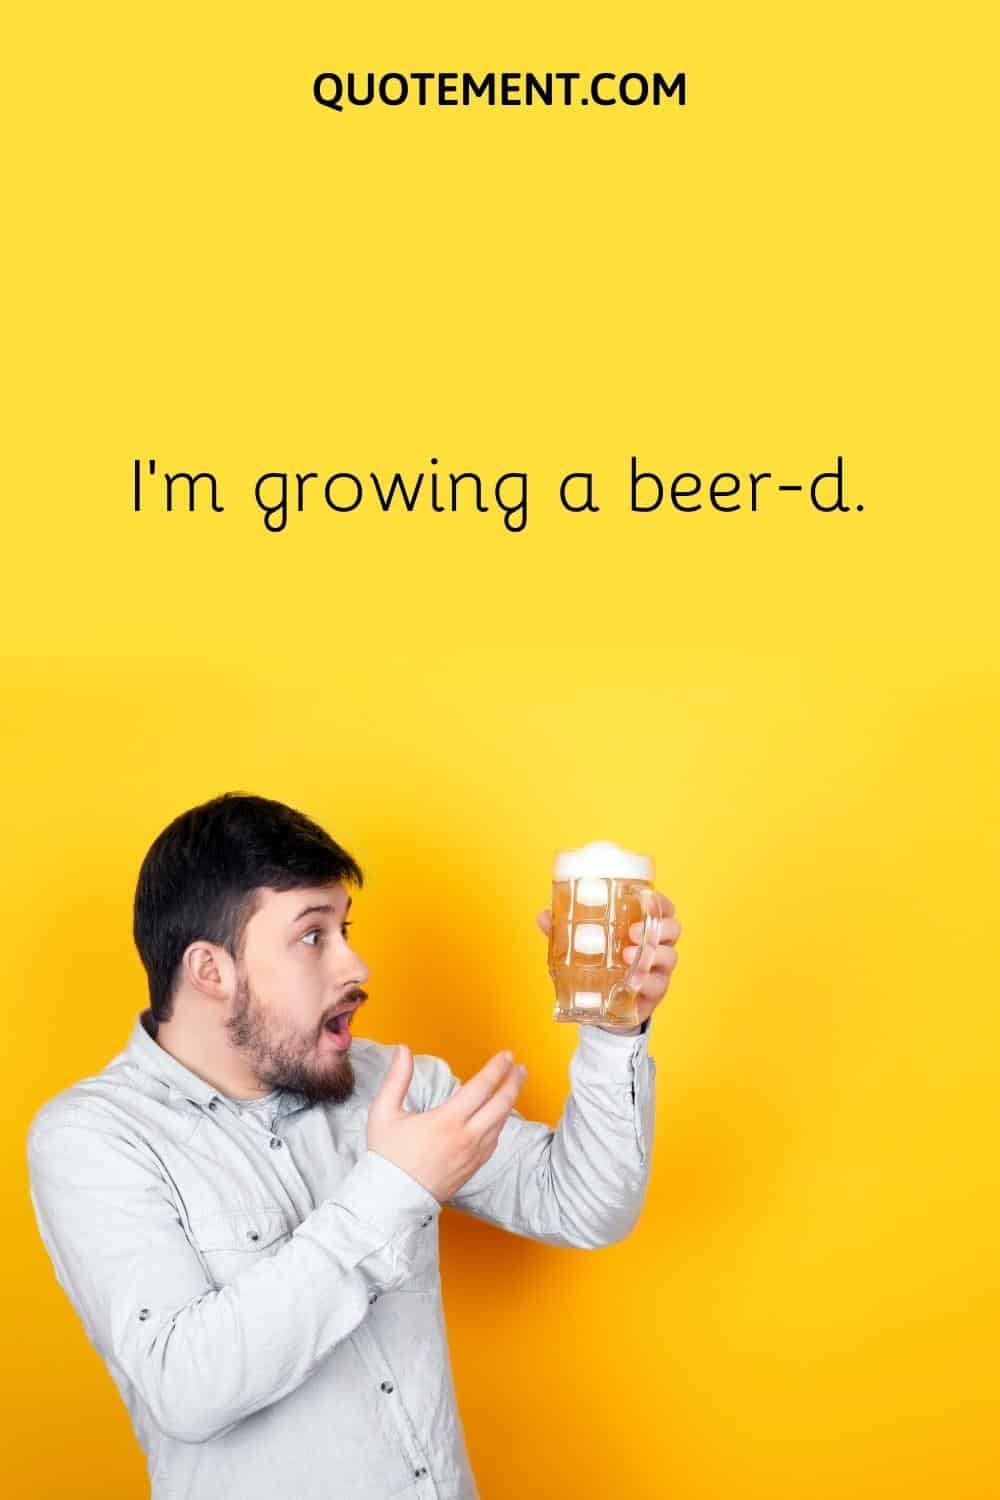 I’m growing a beer-d.